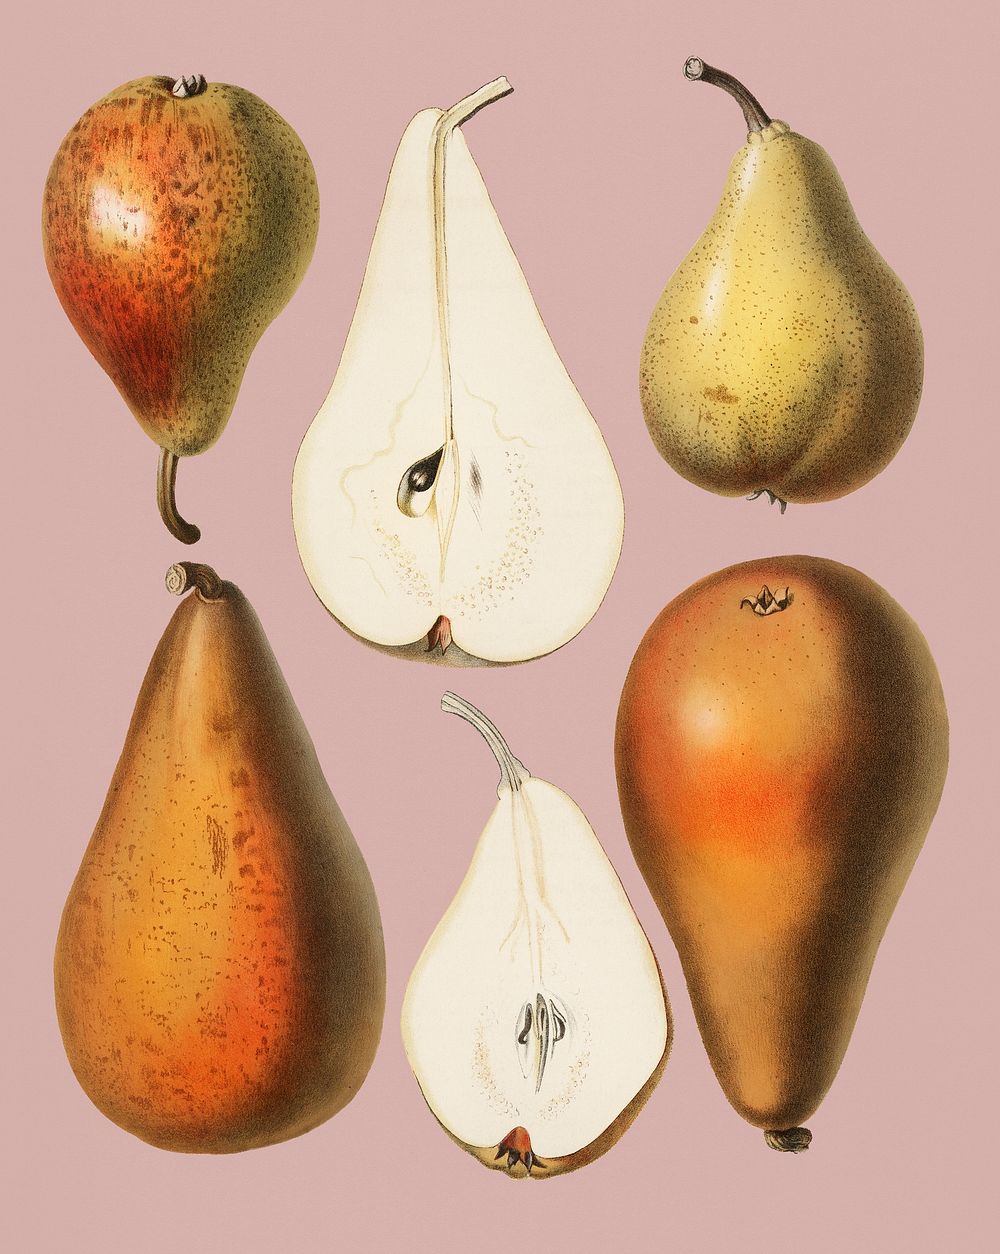 Vintage Illustration of A vintage chromolithograph of fresh pears.